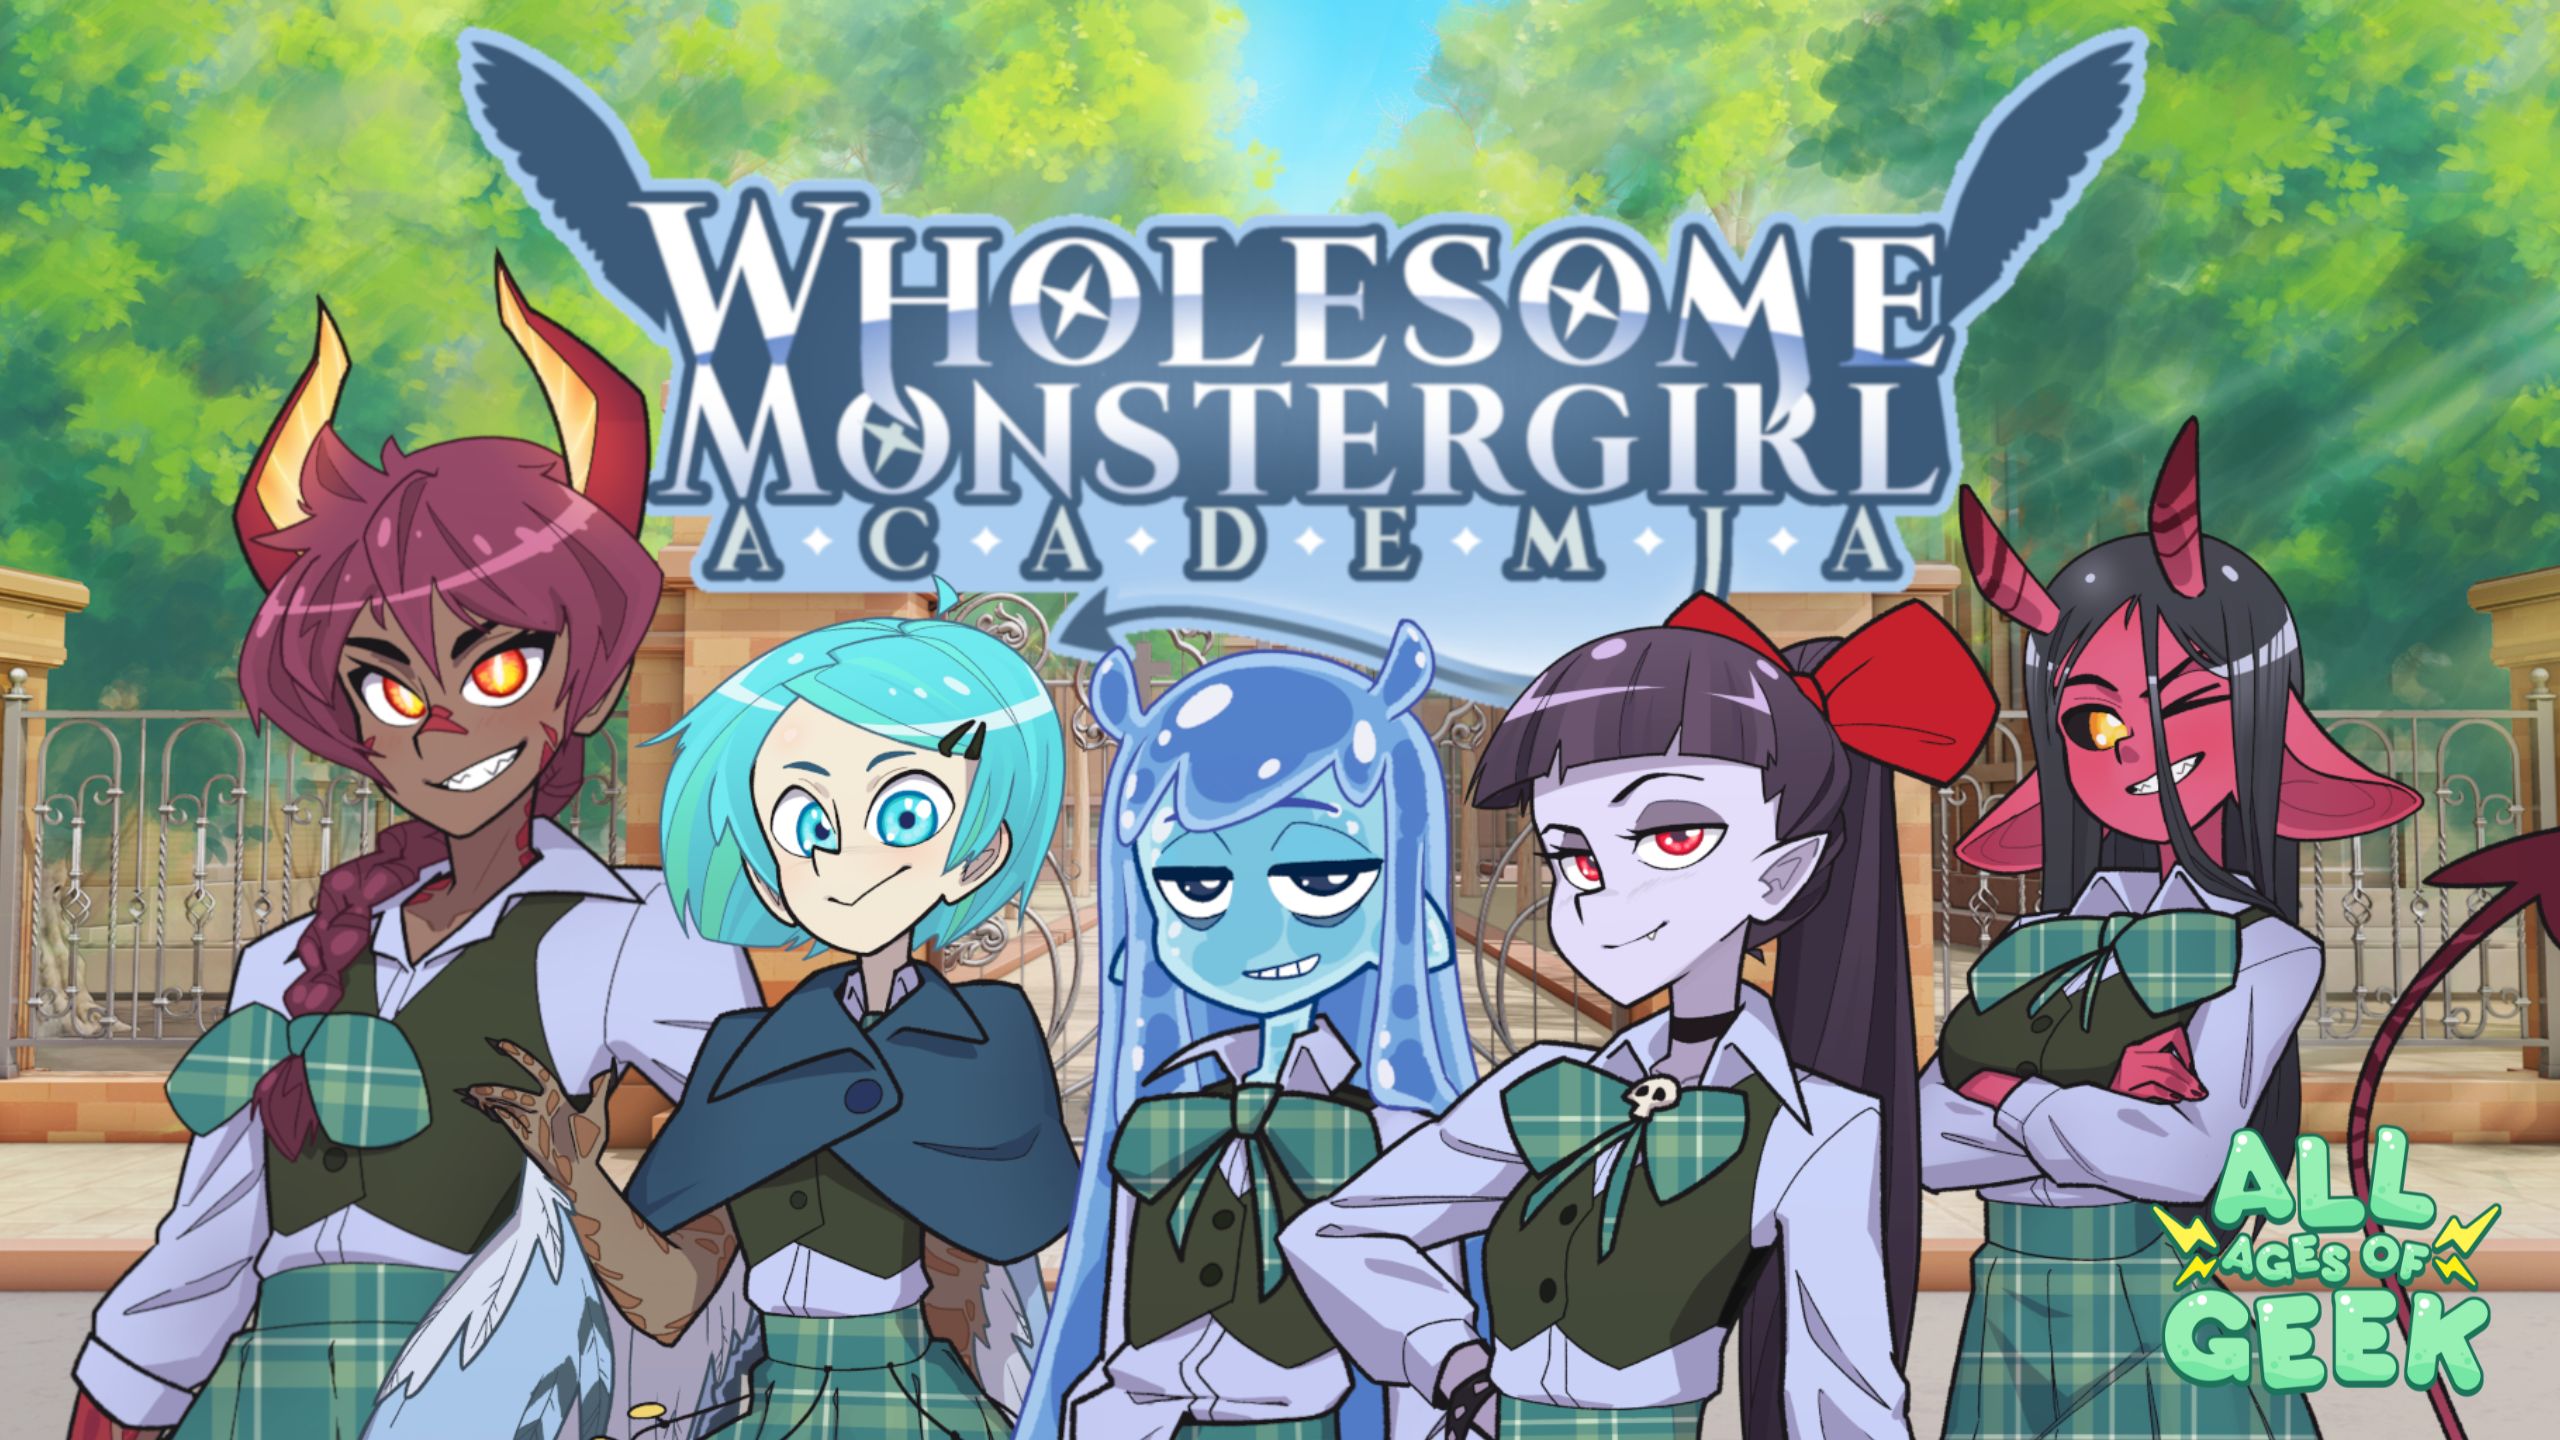 A Catholic, Monster Girl Visual Novel: Wholesome Monster Girl Academy